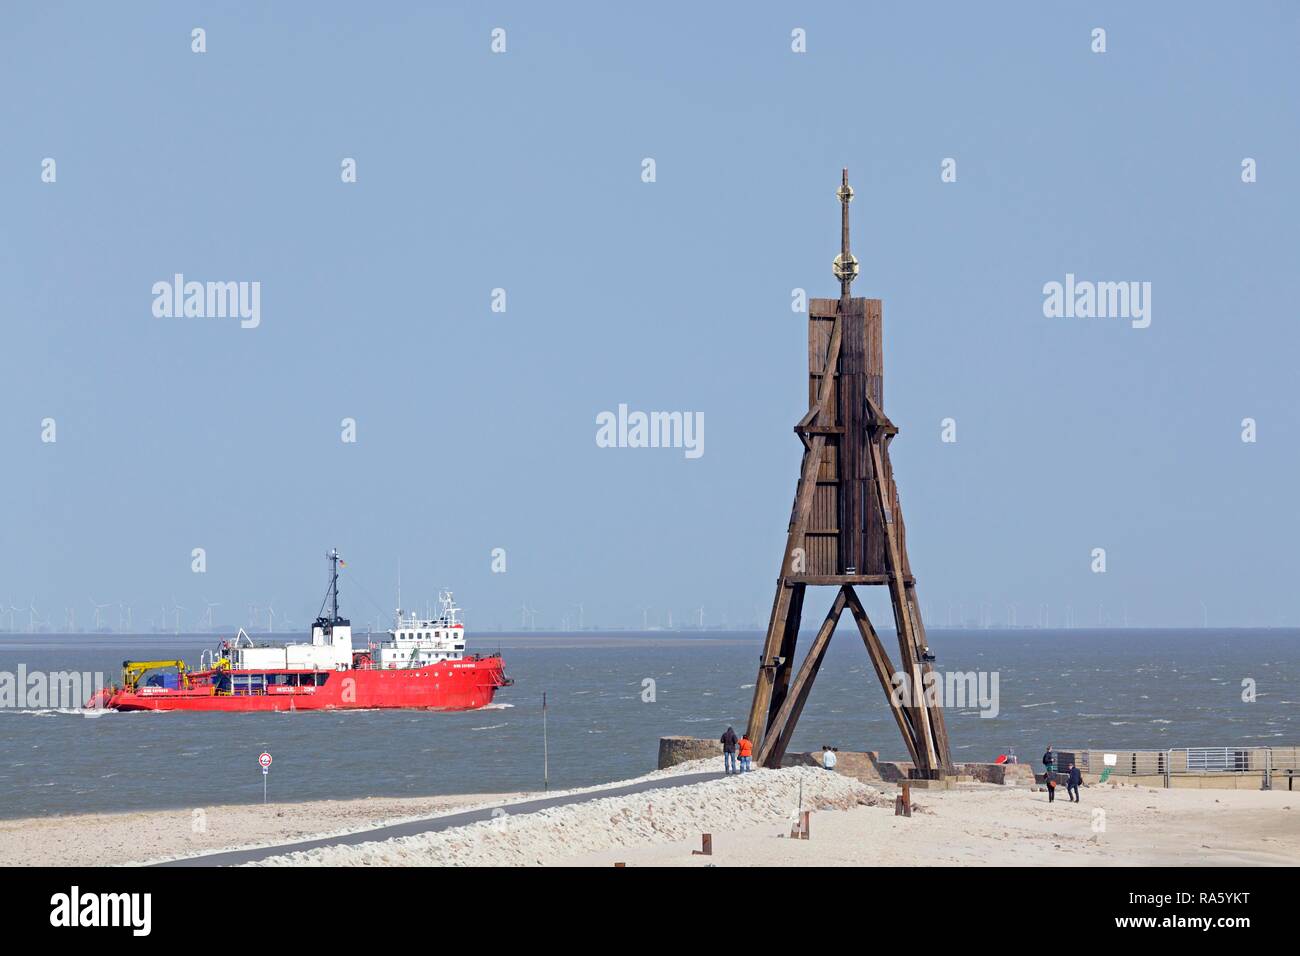 Kugelbake navigational aid, Cuxhaven, Lower Saxony, Germany Stock Photo